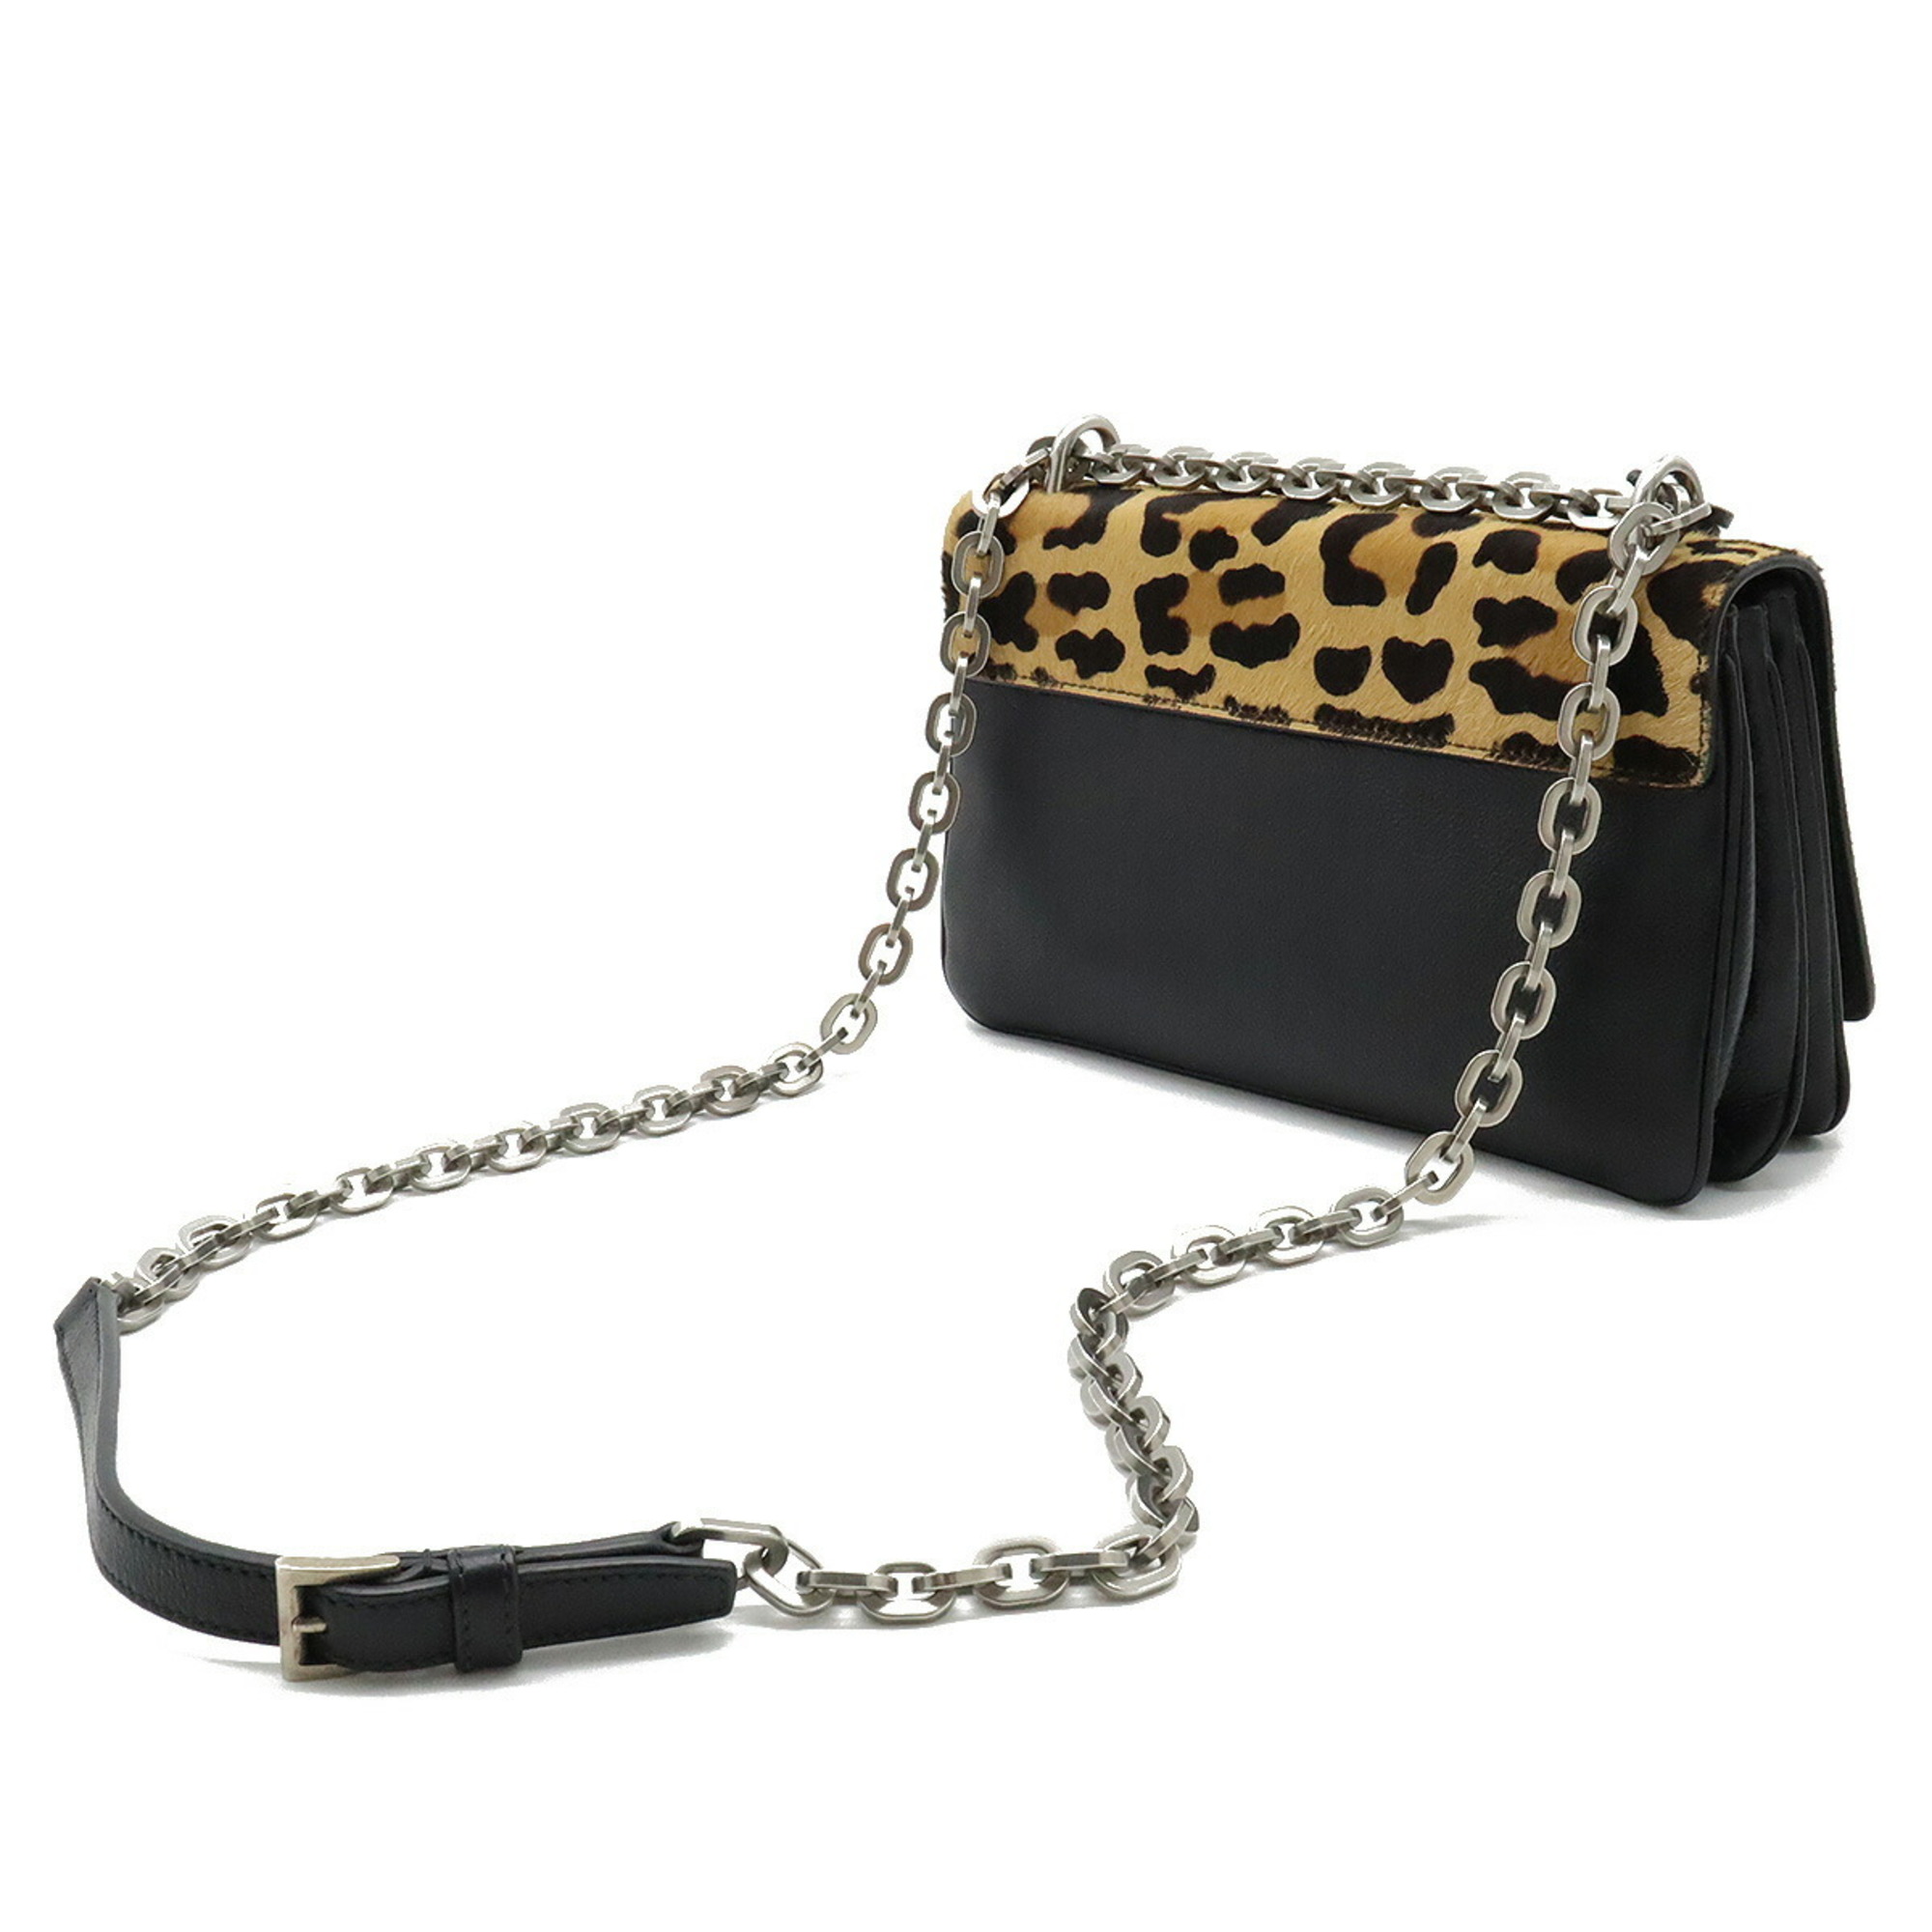 PRADA CAVALLINO GLACE Chain Shoulder Bag Clutch Haraco Leopard Leather Beige Black Overseas Duty Free Shop Purchased Item 1BD009